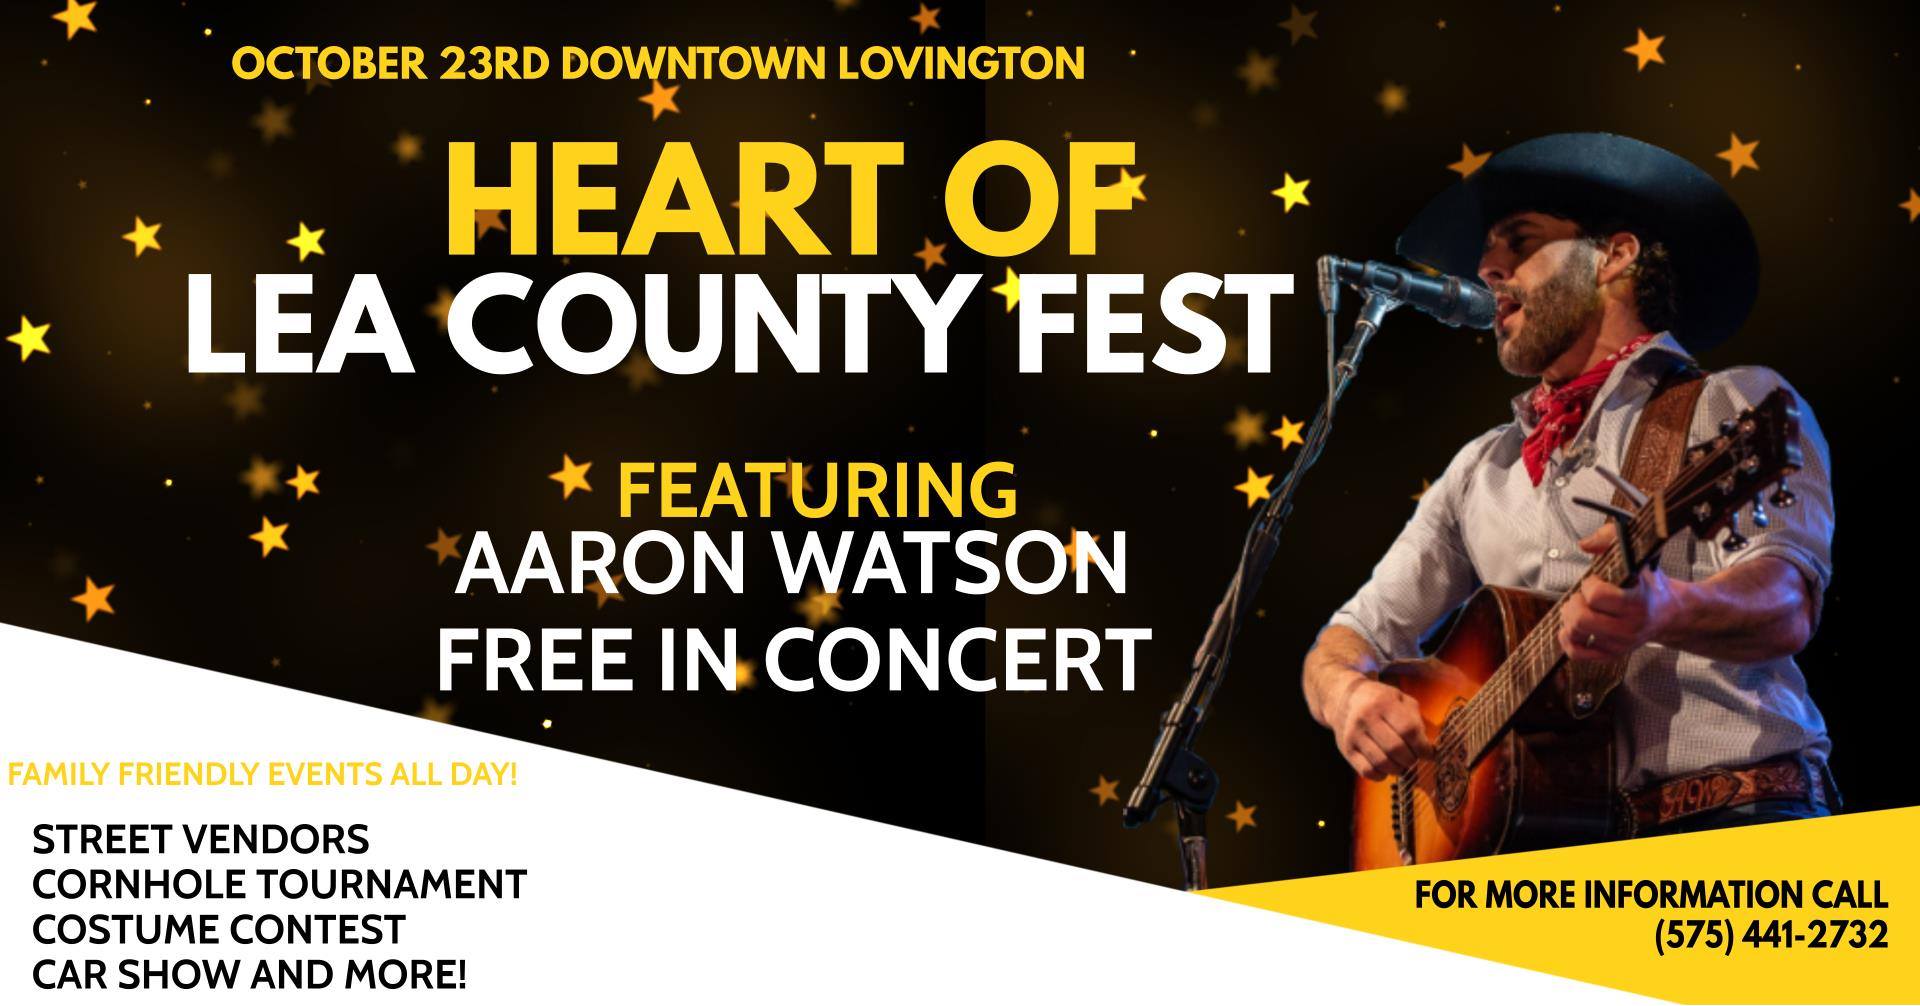 Heart of Lea County Fest banner